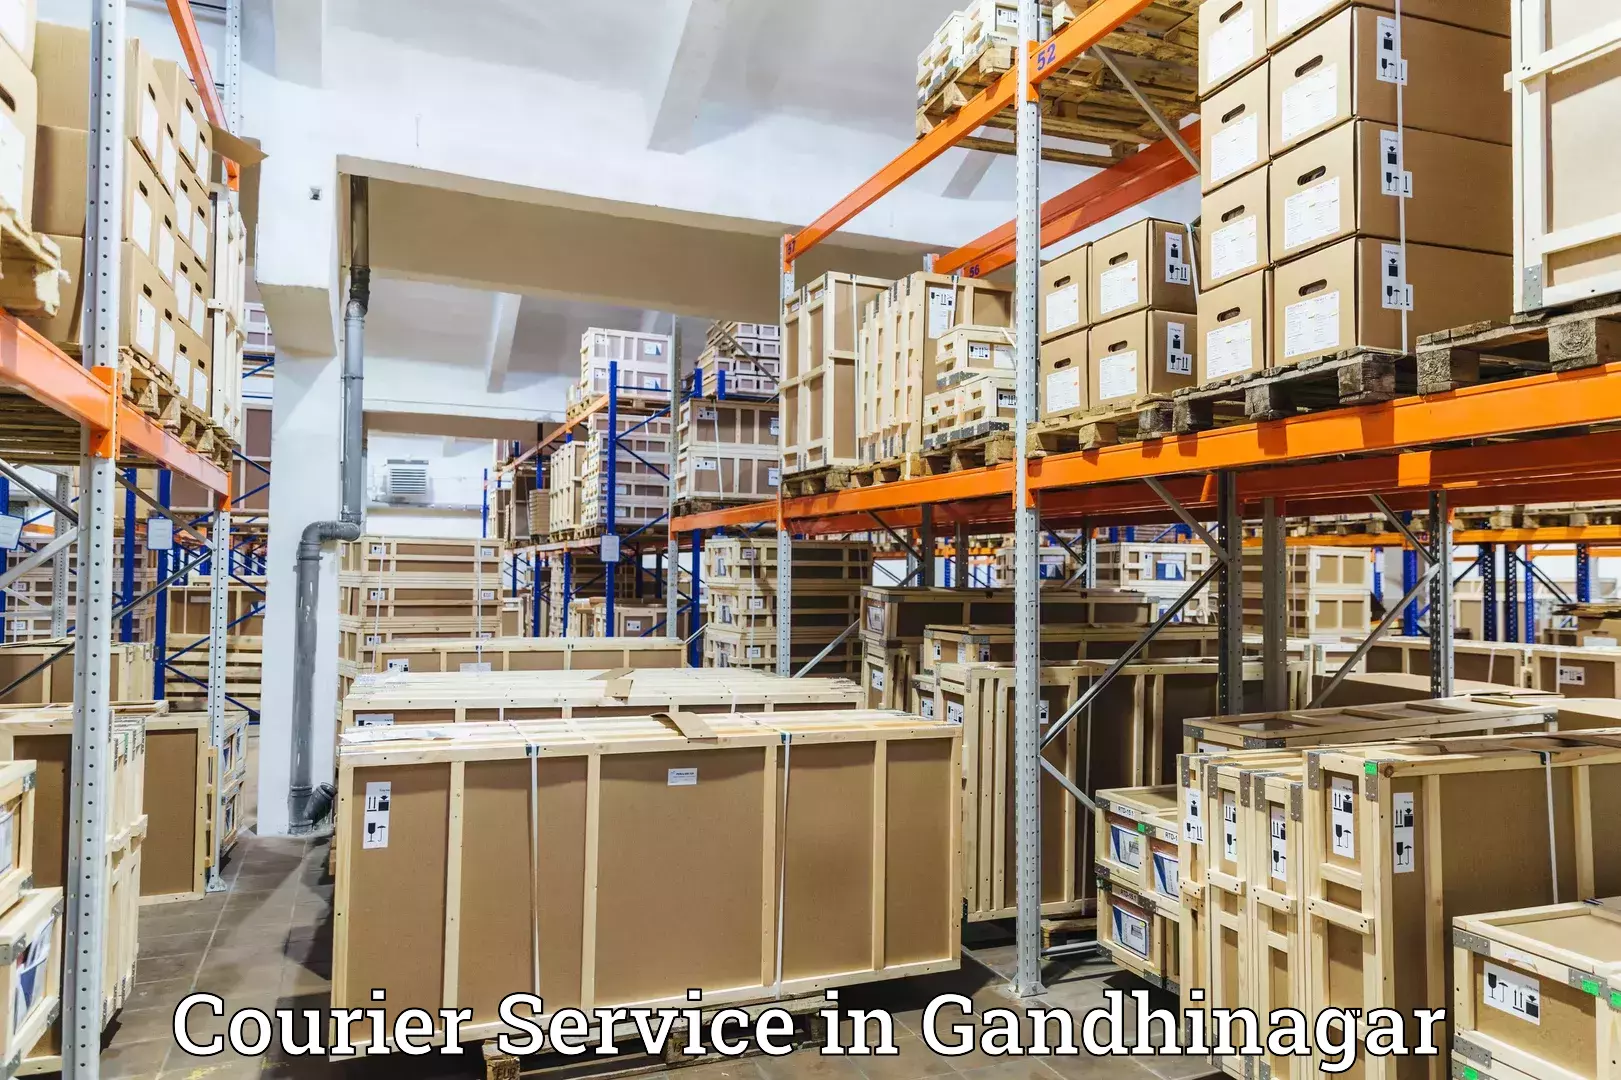 Enhanced delivery experience in Gandhinagar